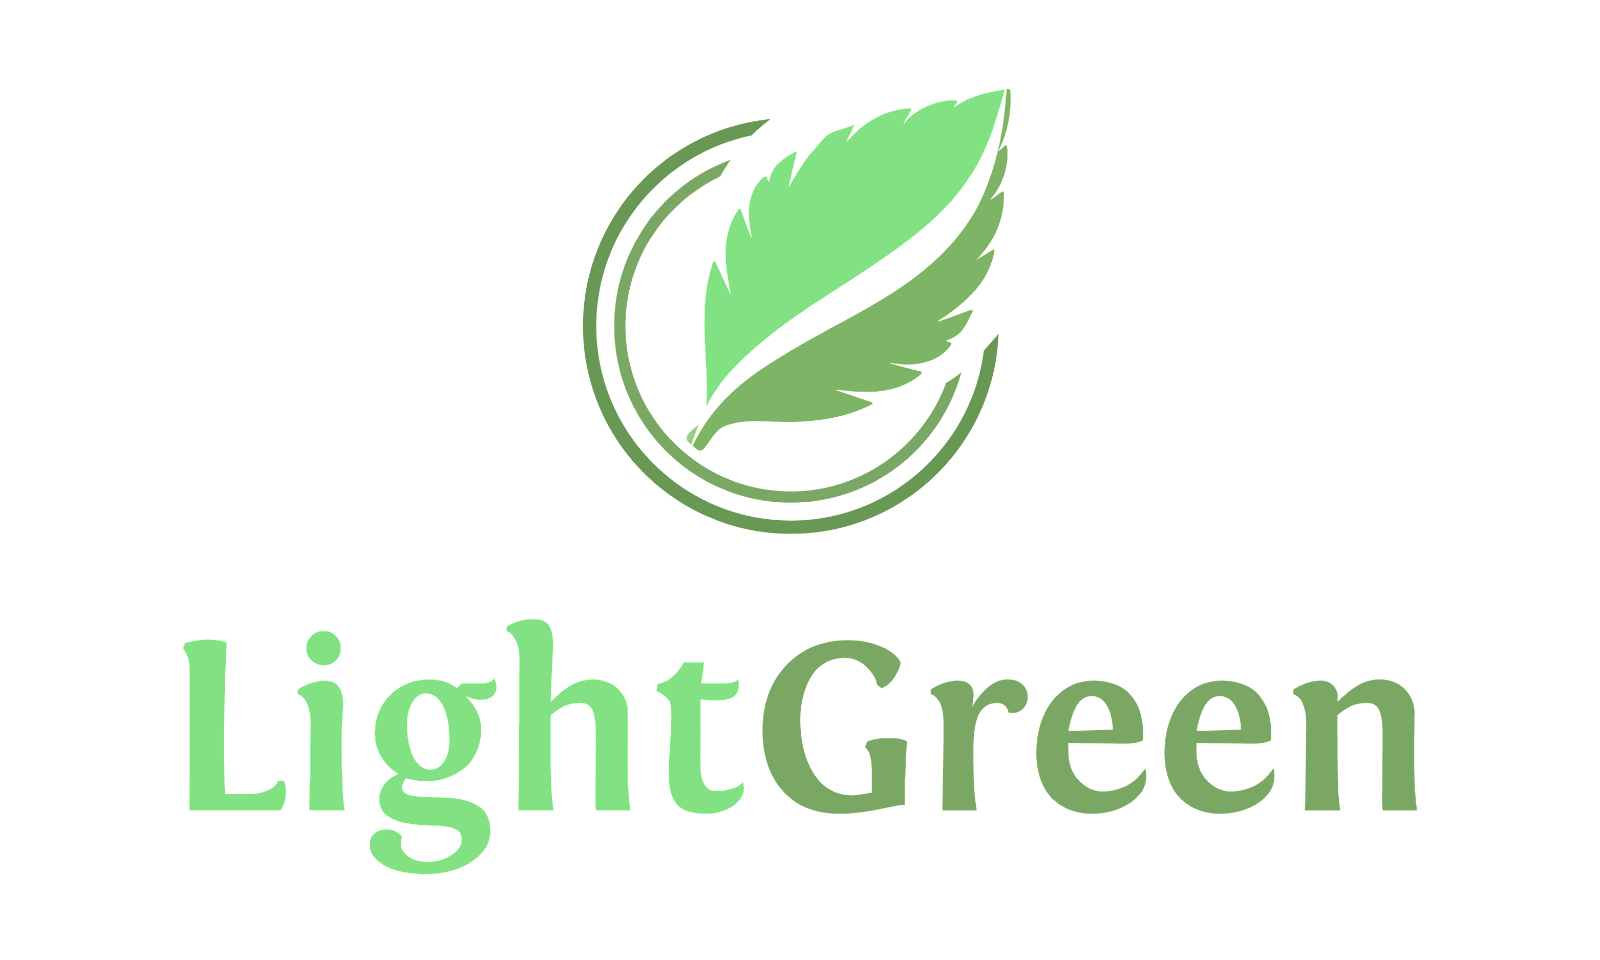 LightGreen.com - Creative brandable domain for sale